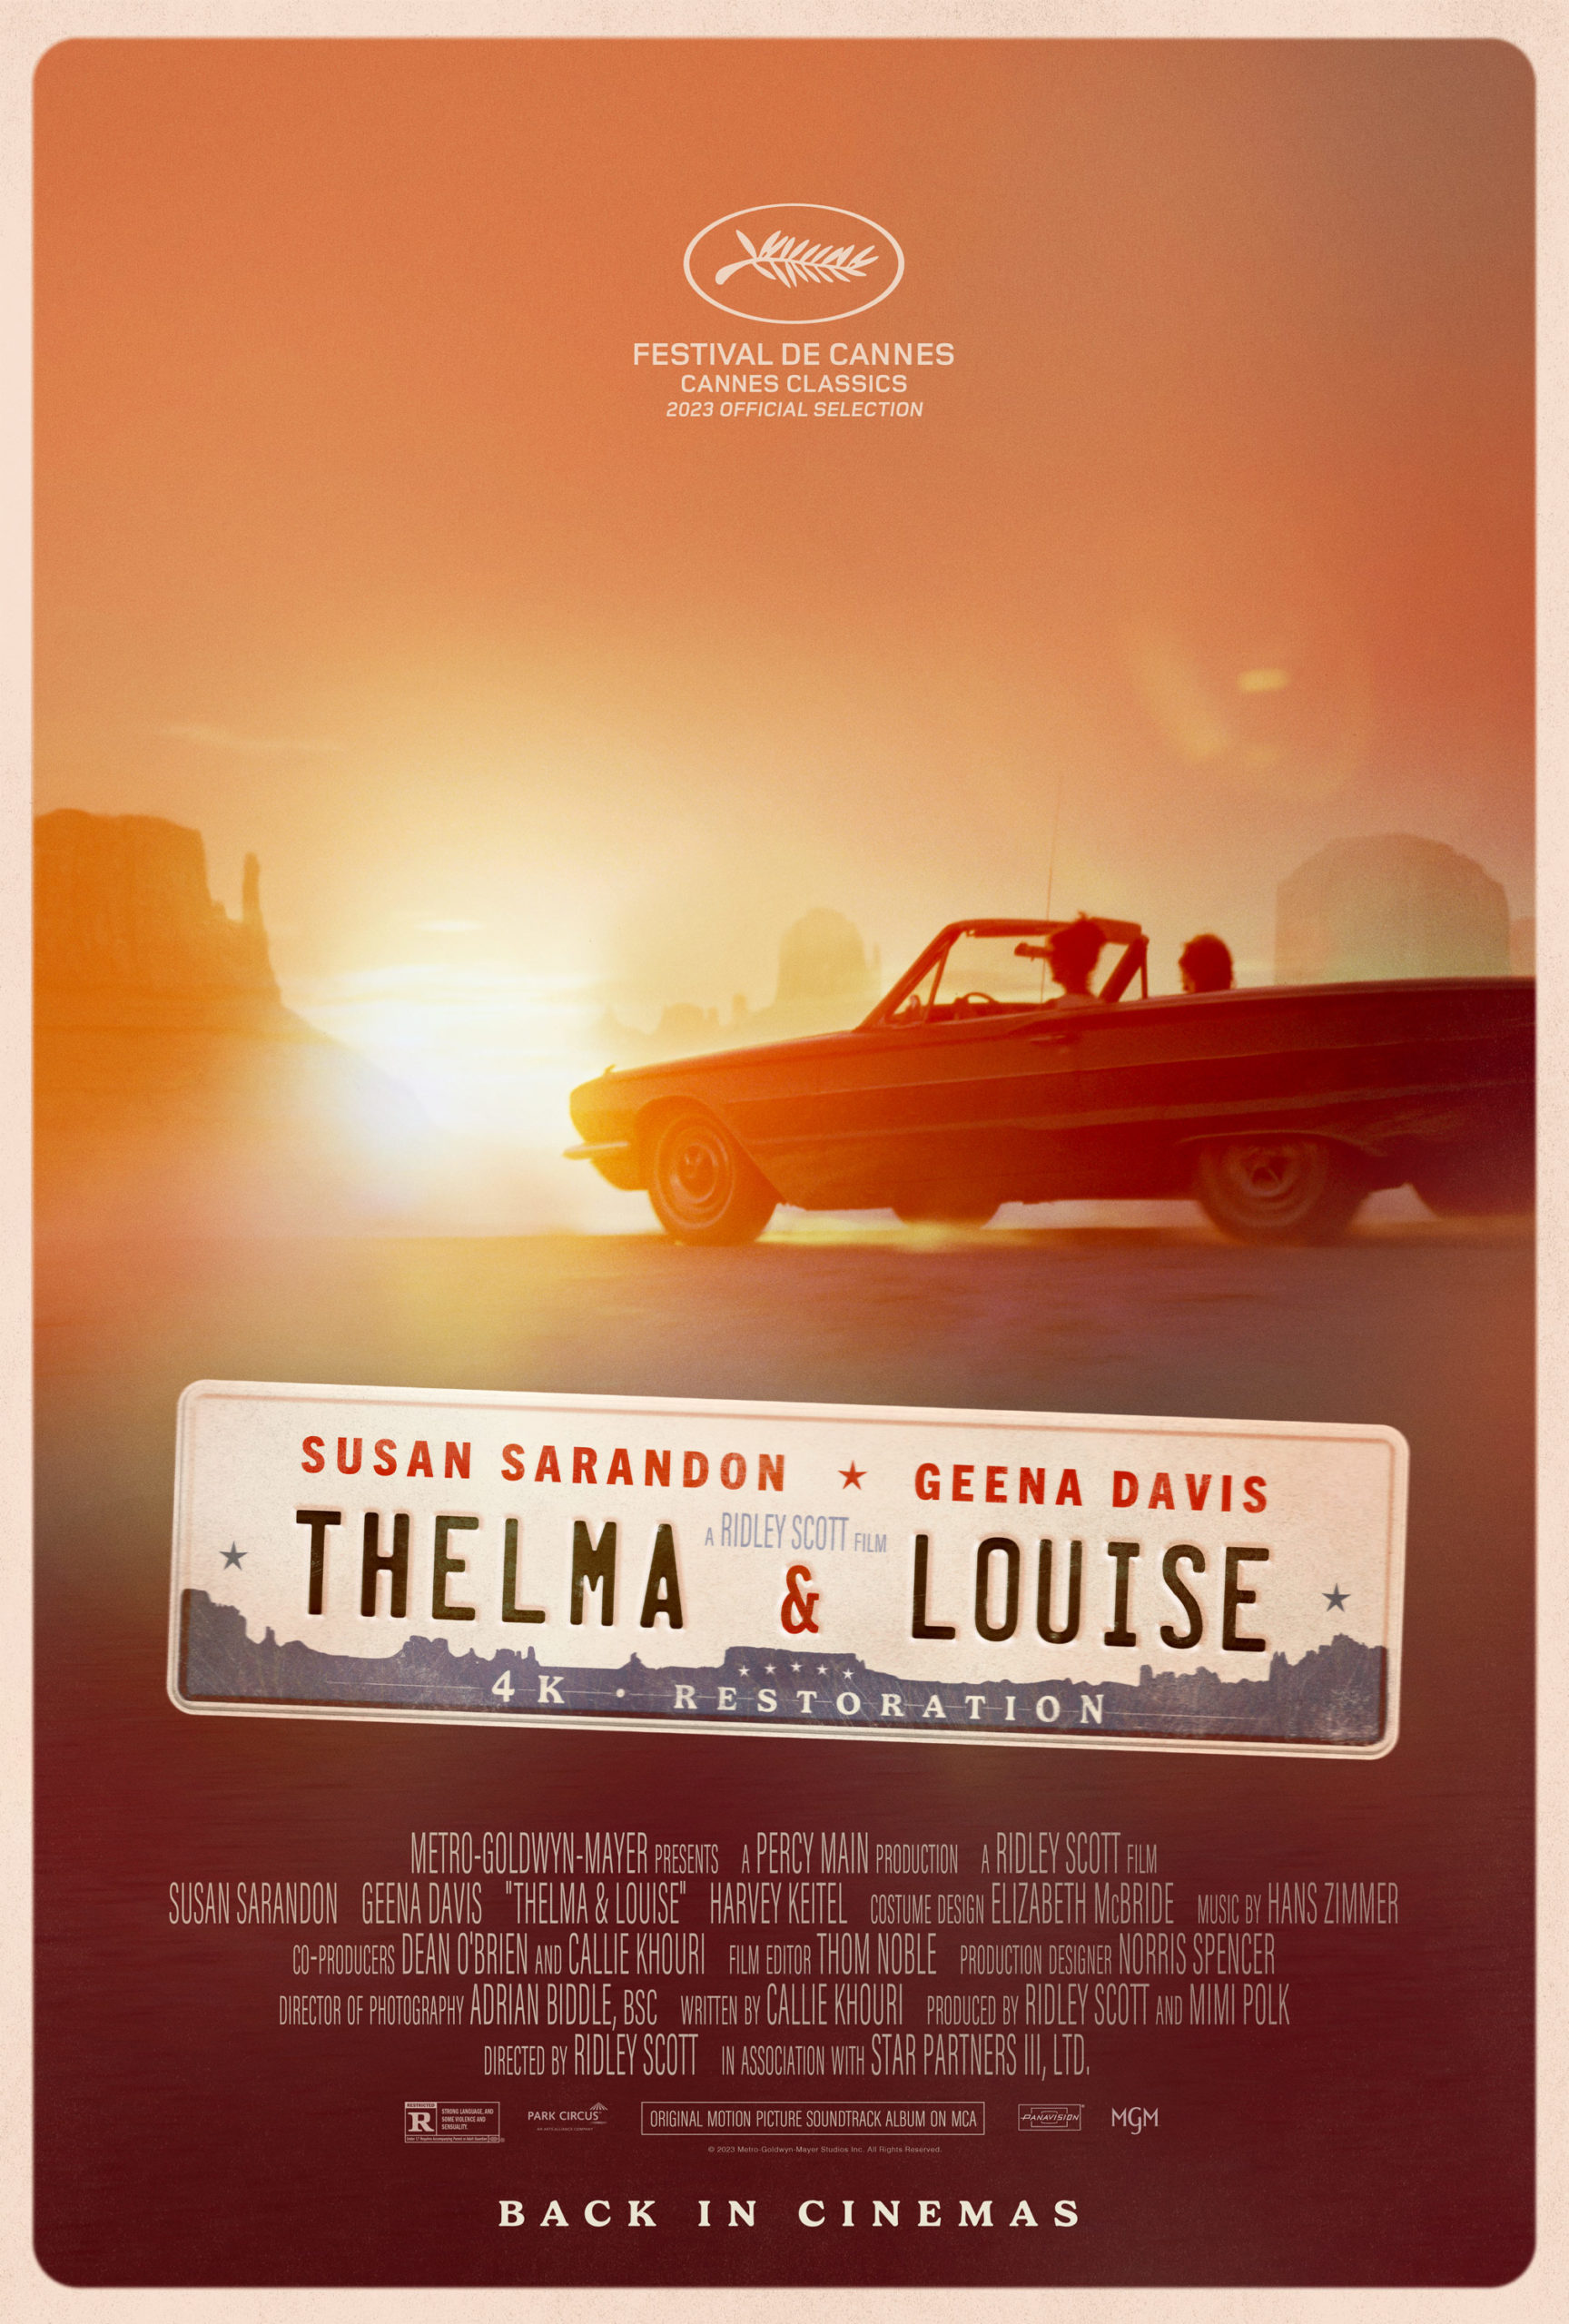 25th Anniversary of Thelma & Louise - Susan Sarandon and Geena Davis  Reflect on Thelma & Louise